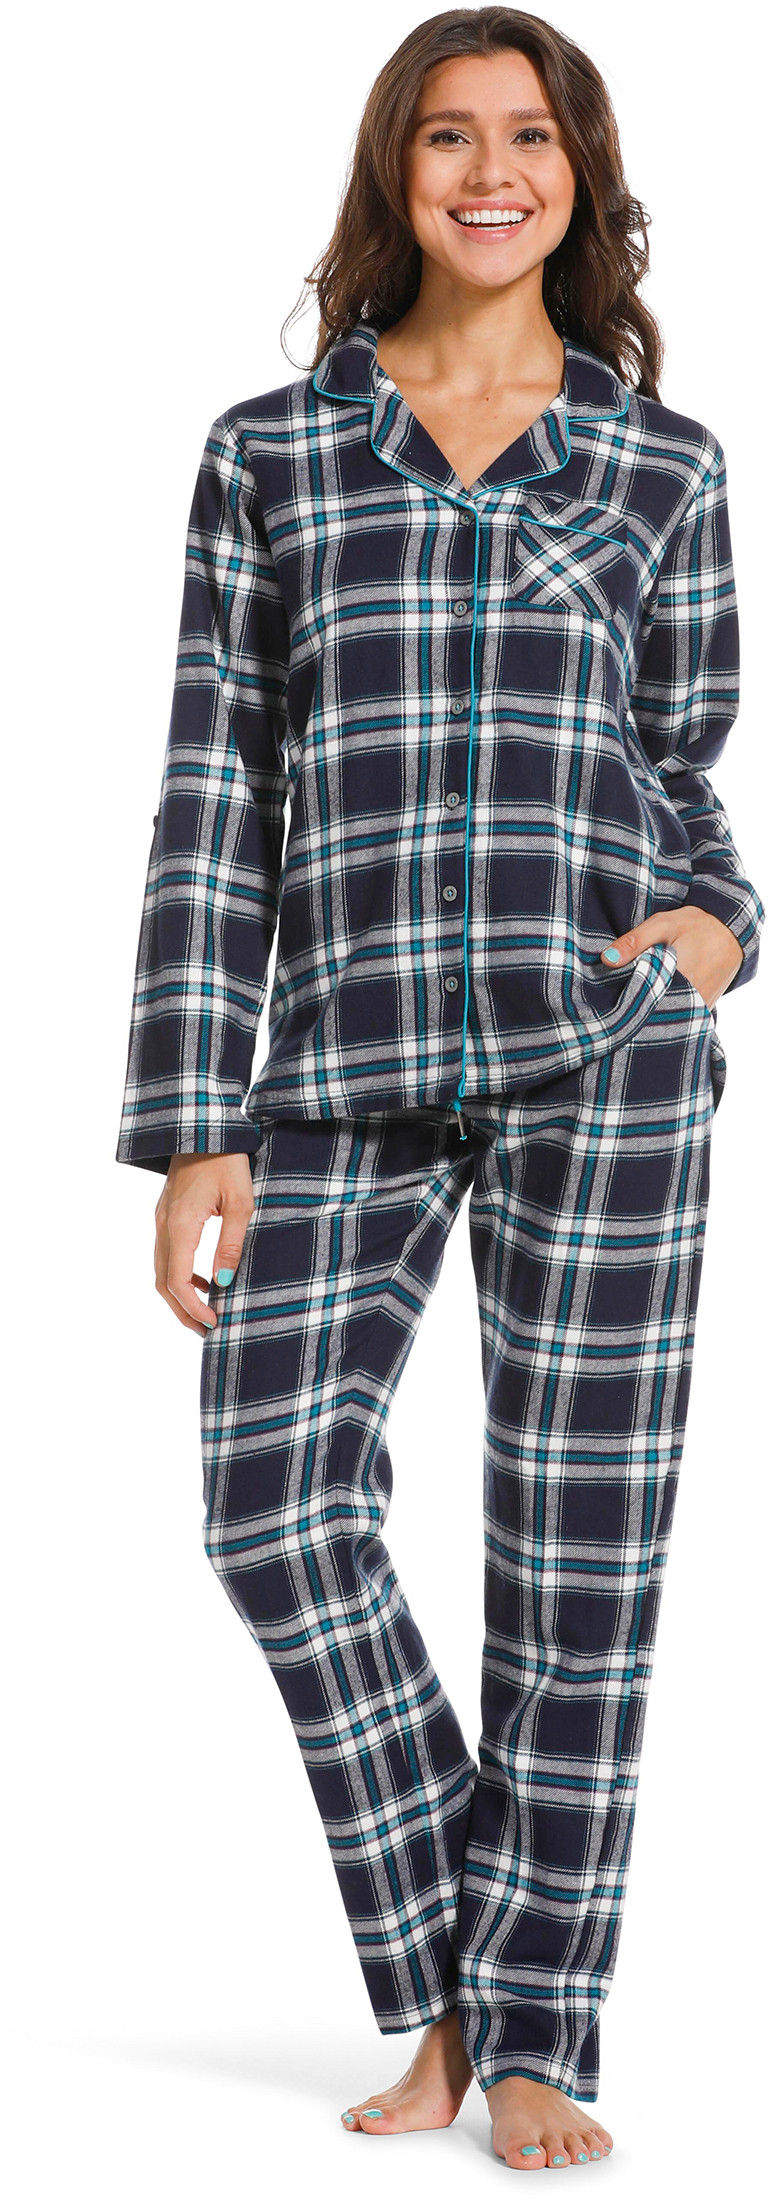 Rebelle dames pyjama flanel 21222-408-6-46